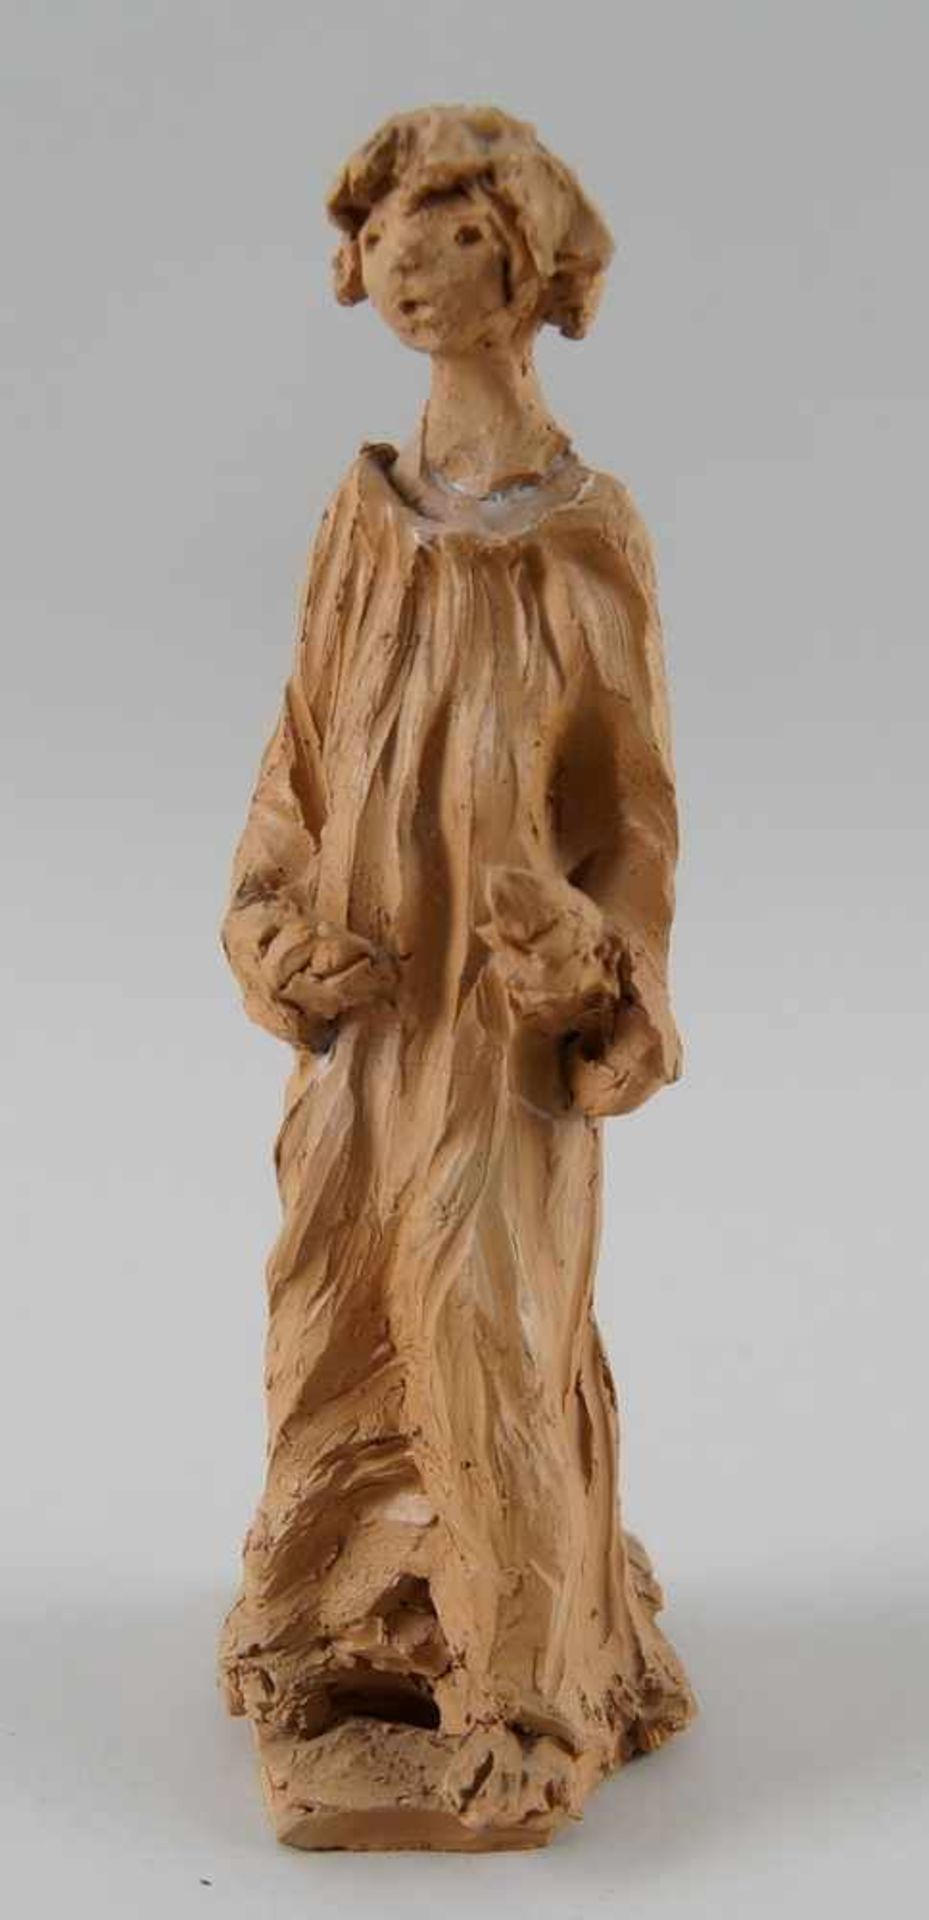 Francesco Messino Skulptur aus Ton, besch., H 25 cm- - -24.00 % buyer's premium on the hammer